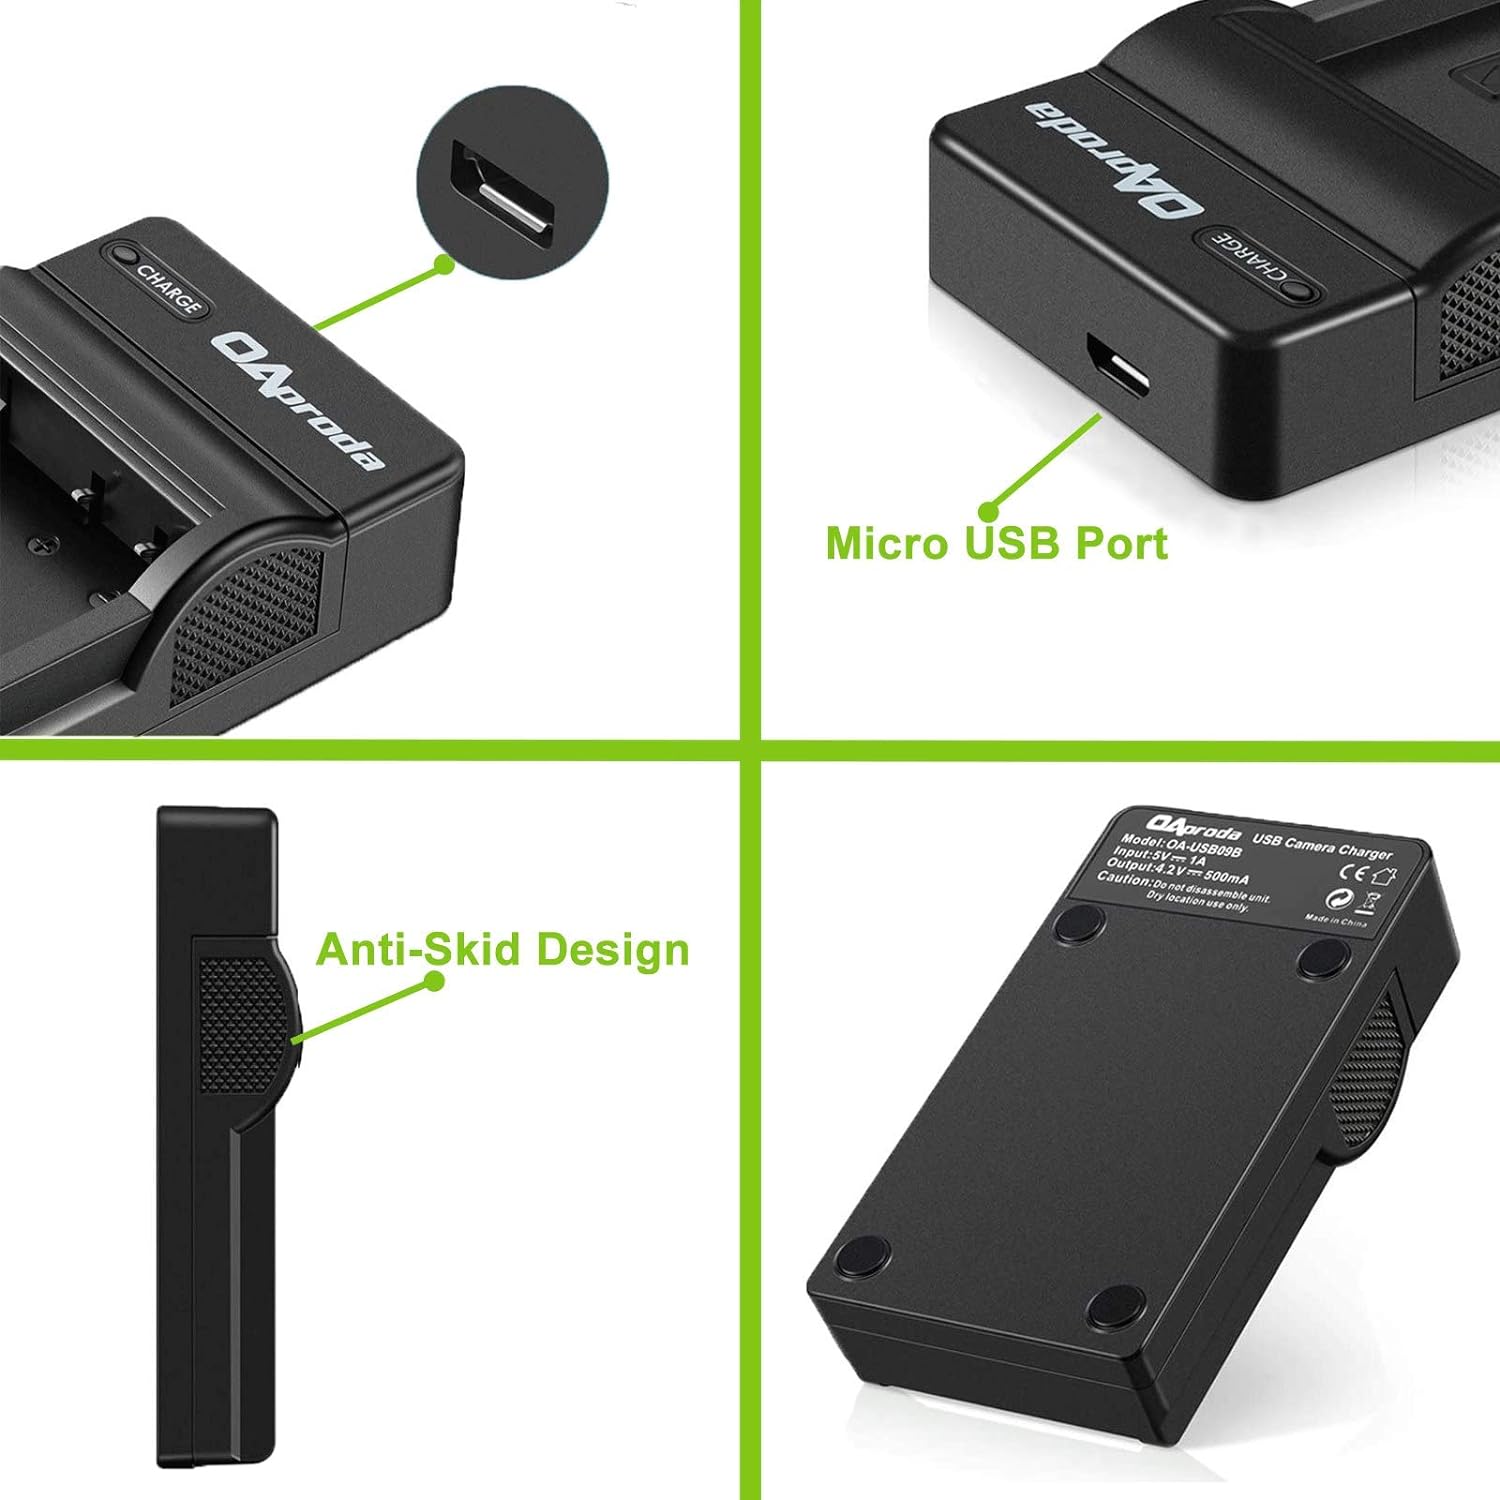 OAproda 2 Pack EN-EL19 Battery and Rapid USB Charger for Nikon Coolpix S32, S33, S100, S2800, S3100, S3200, S3300, S3500, S3600, S3700, S4100, S4200, S4300, S5200, S5300, S6500, S6800, S7000 Camera…